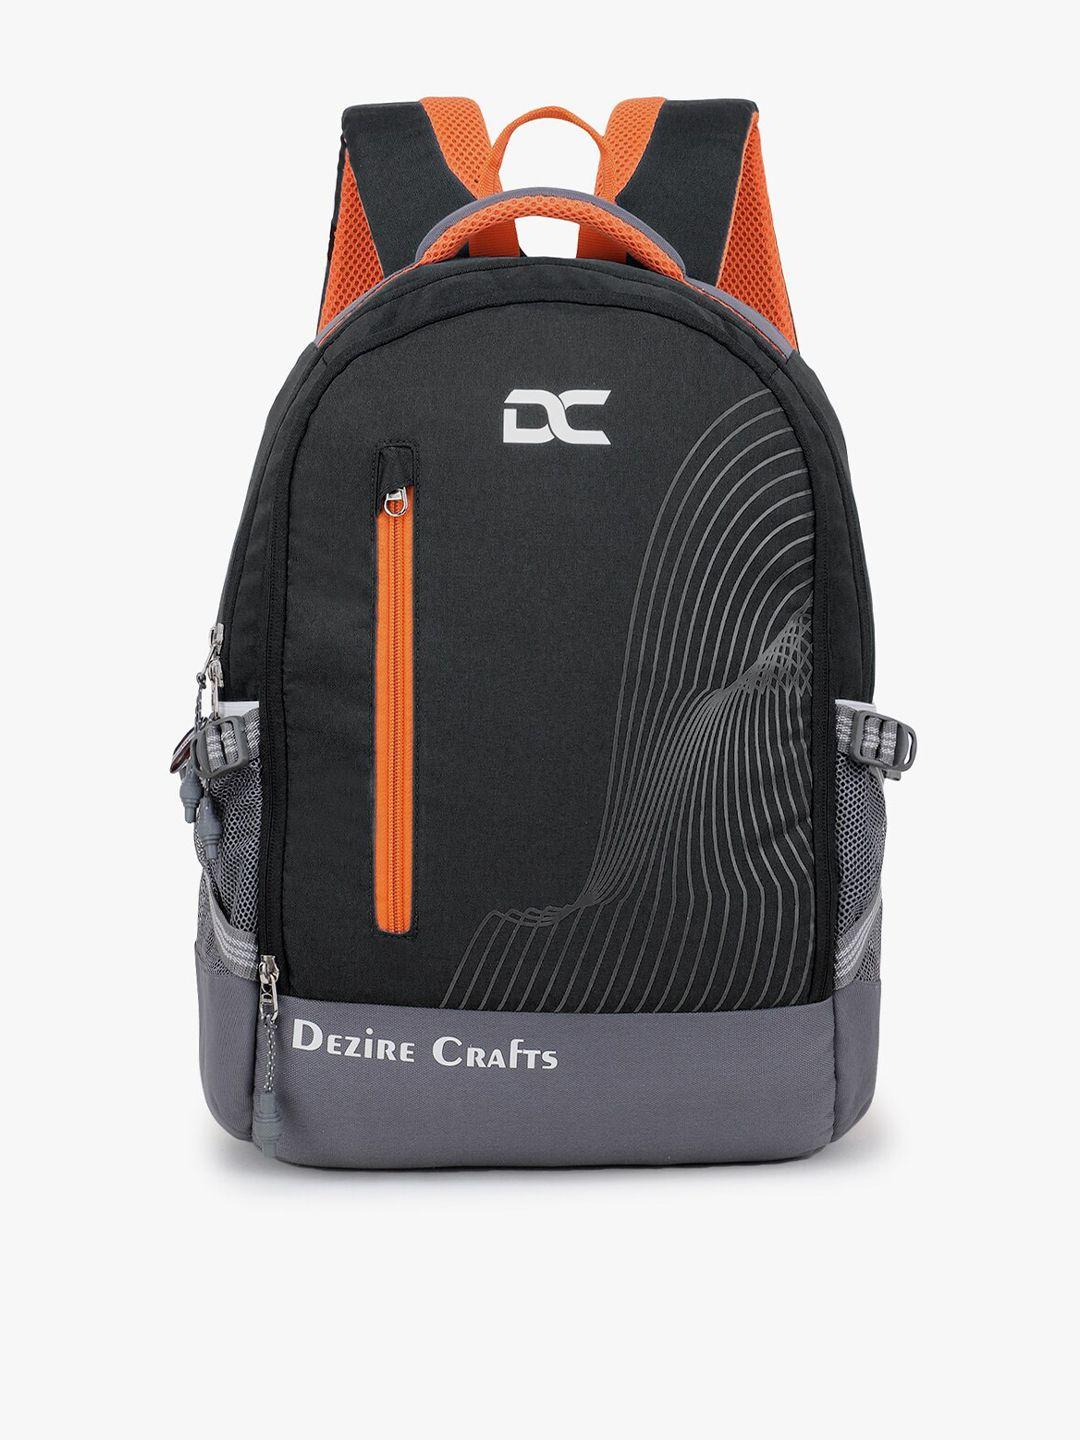 dezire crafts unisex black & orange backpack